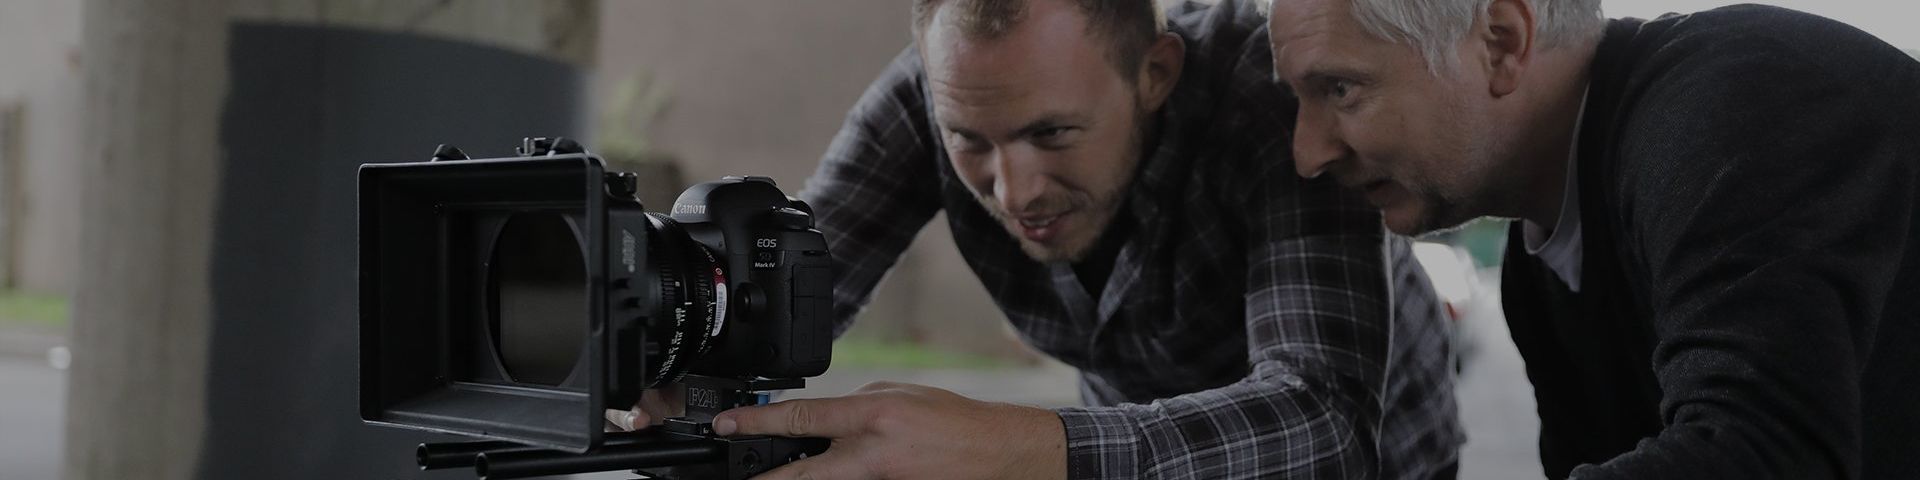 Two camera men inspecting the rear screen of a Canon EOS camera